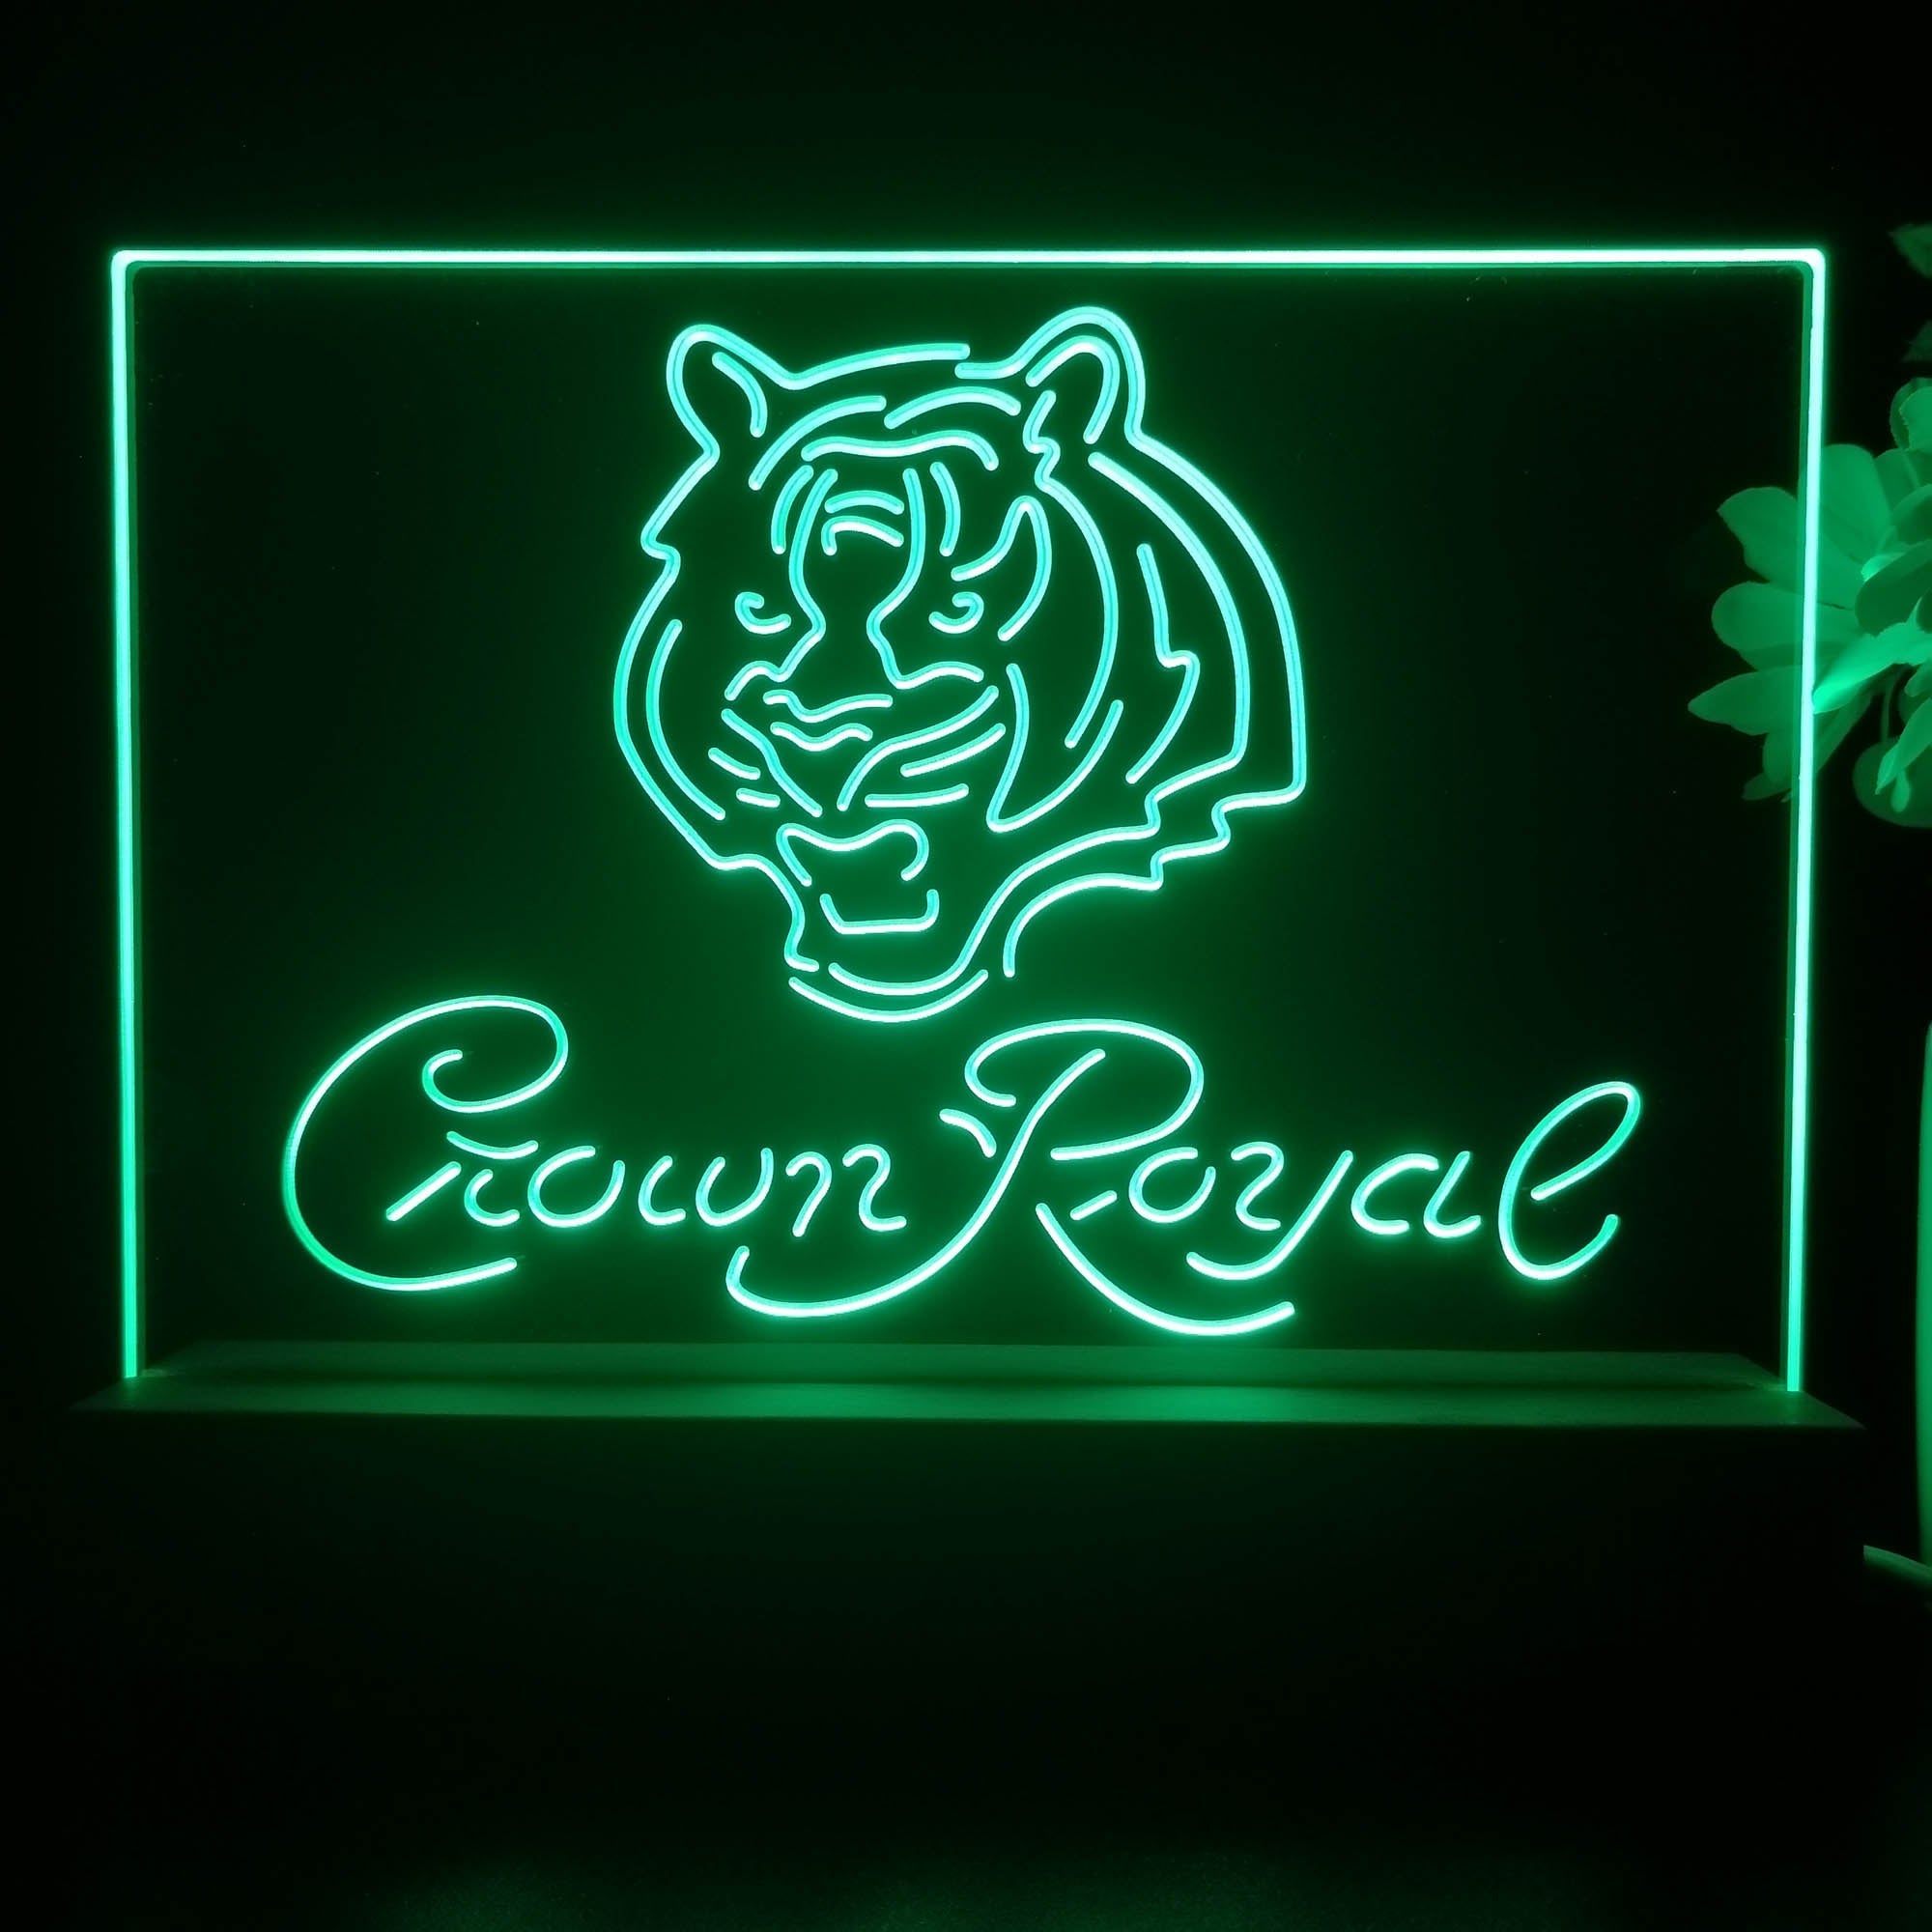 Crown Royal Bar Cincinnati Bengals Est. 1968 Night Light Pub Bar Lamp